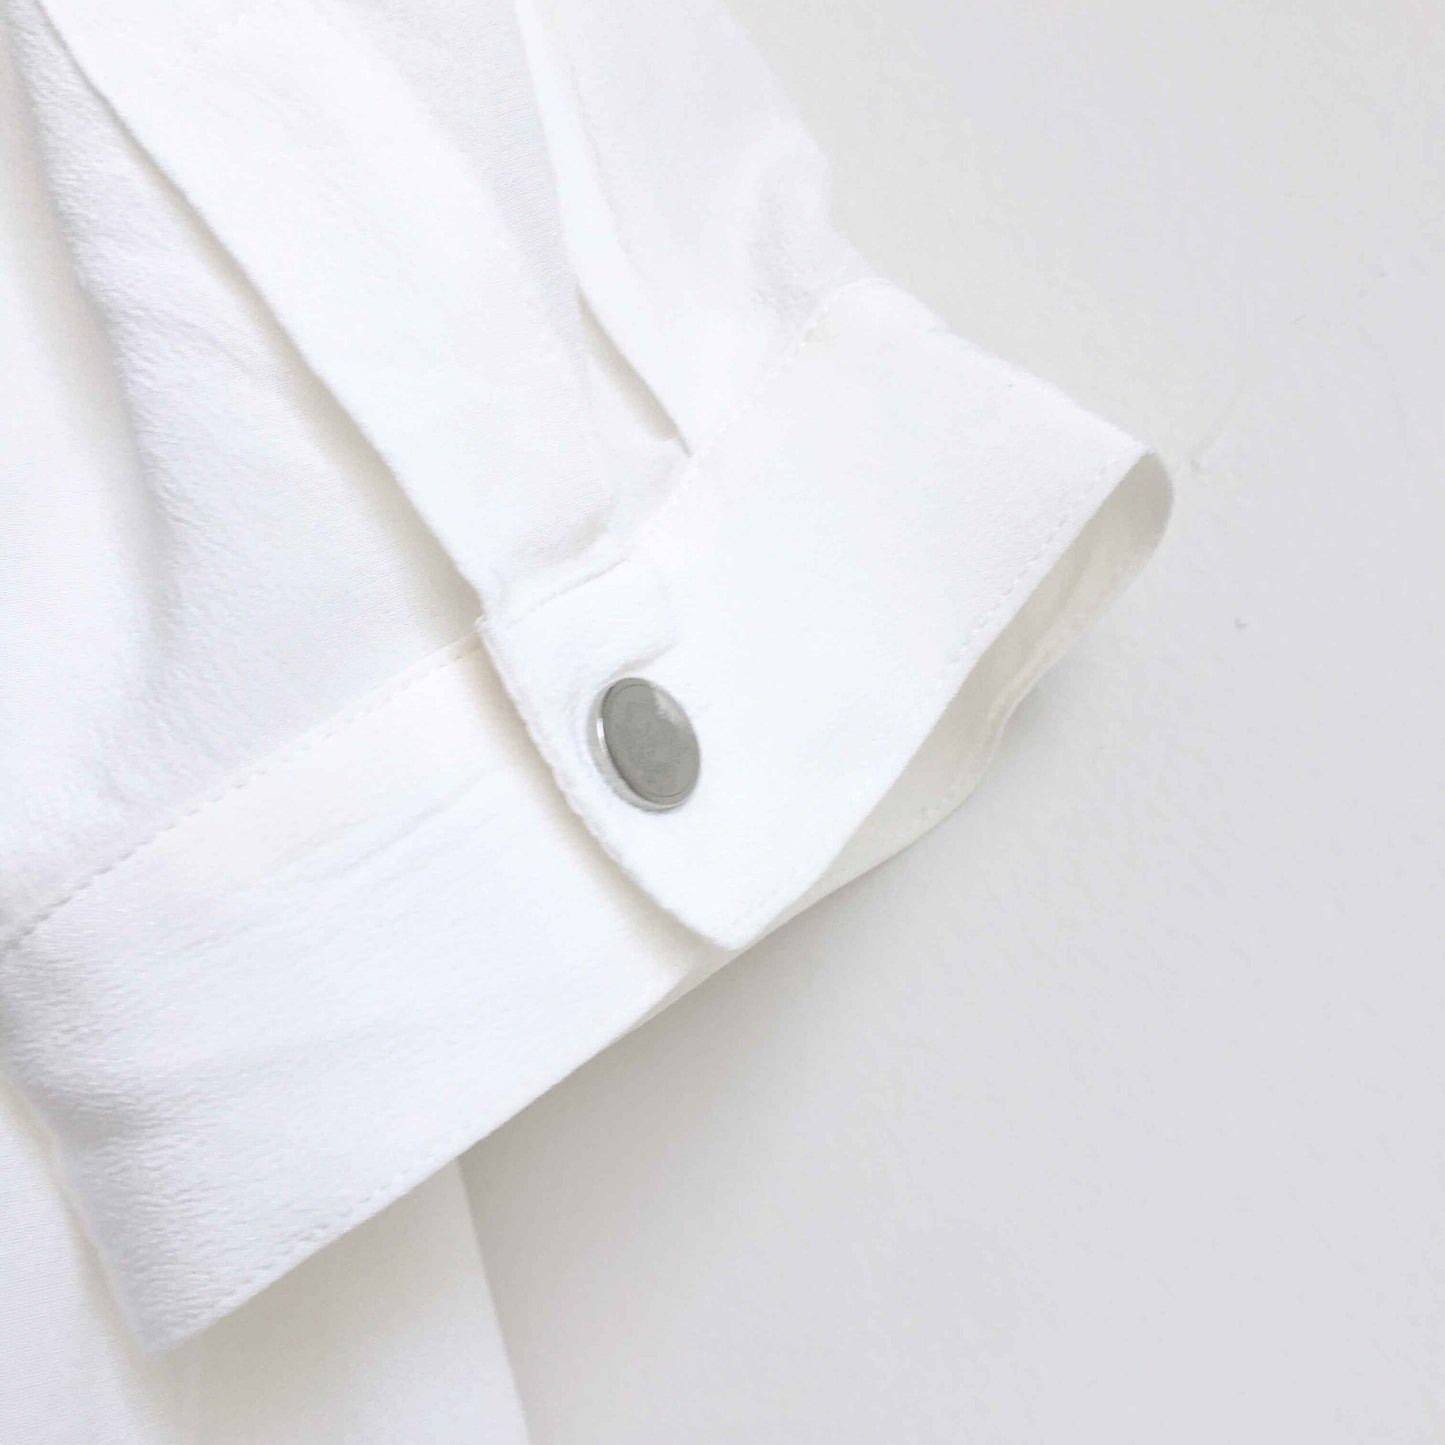 The Kooples silk button down pocket shirt - size Medium